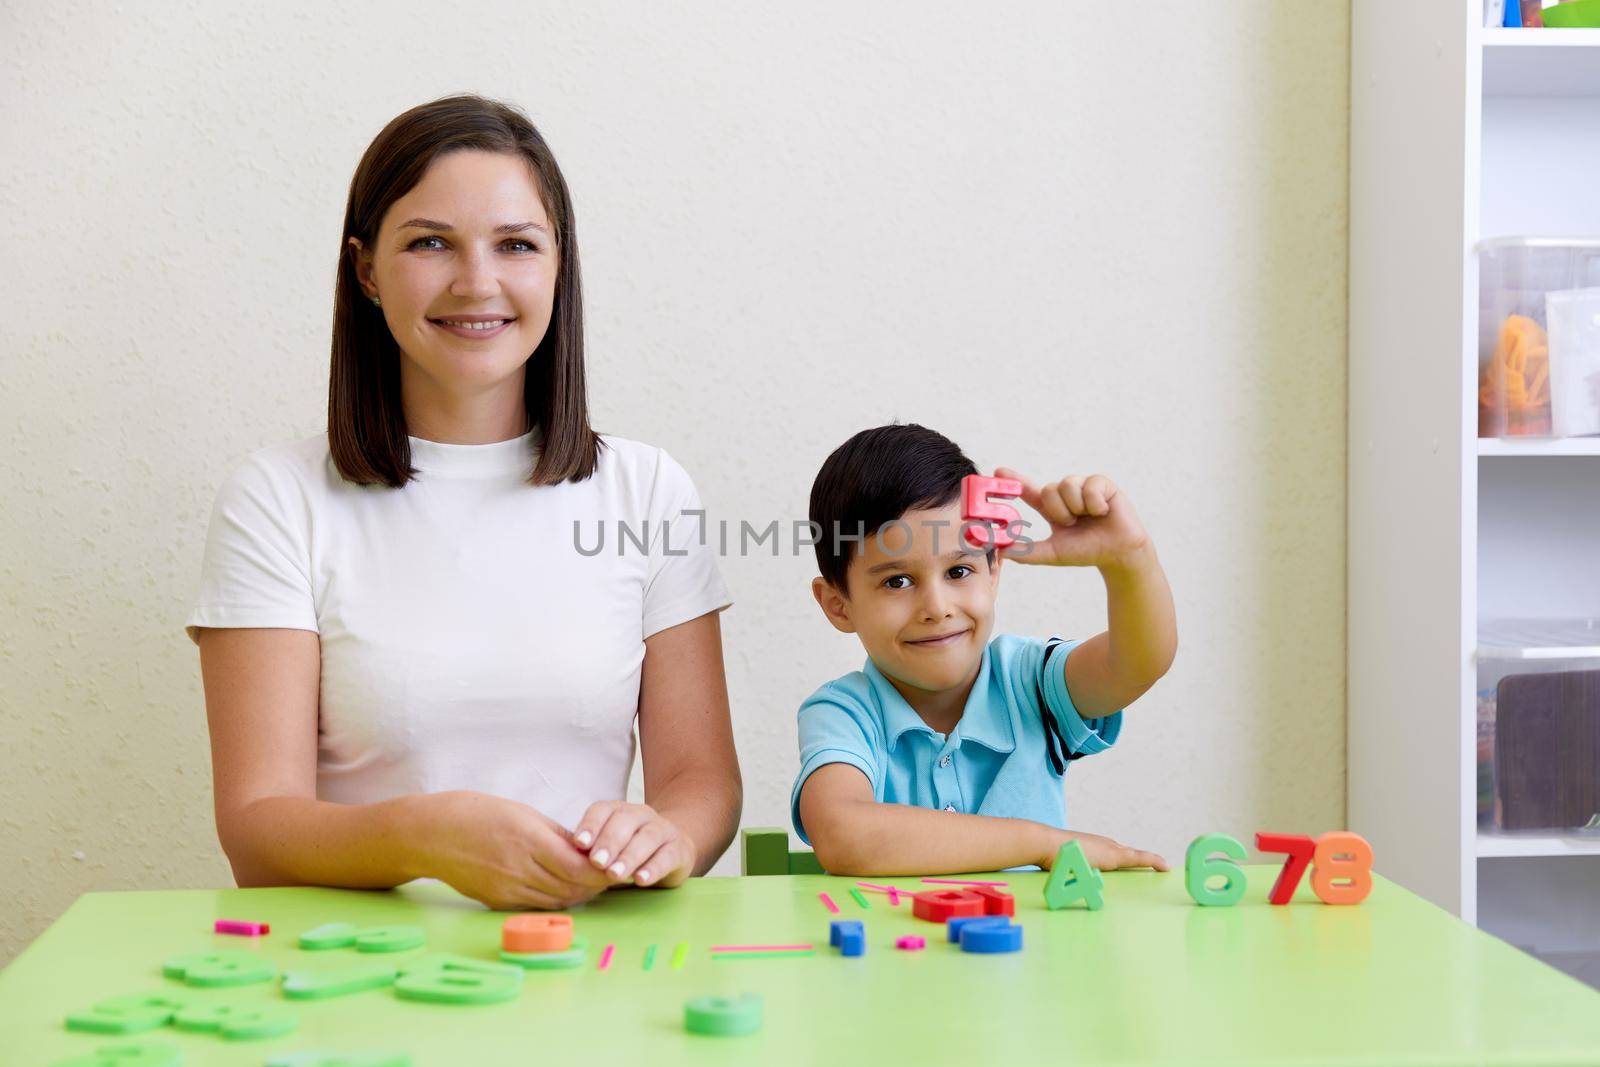 Children practice correct pronunciation with speech therapist by Mariakray